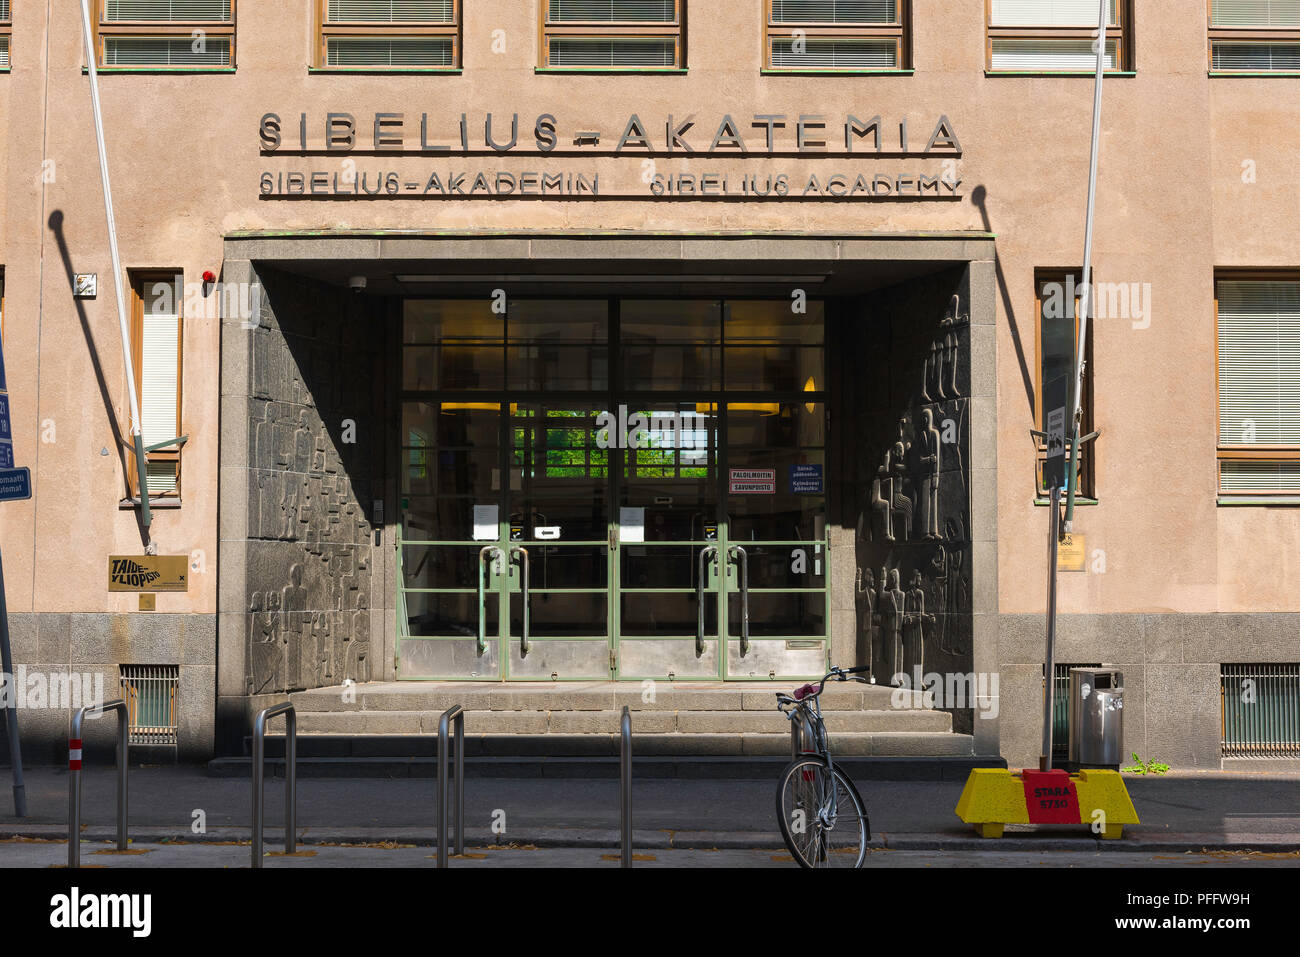 Helsinki Sibelius Academy, view of the Art Nouveau styled entrance to the Sibelius Akatemia in Nervanderinkatu in central Helsinki, Finland. Stock Photo